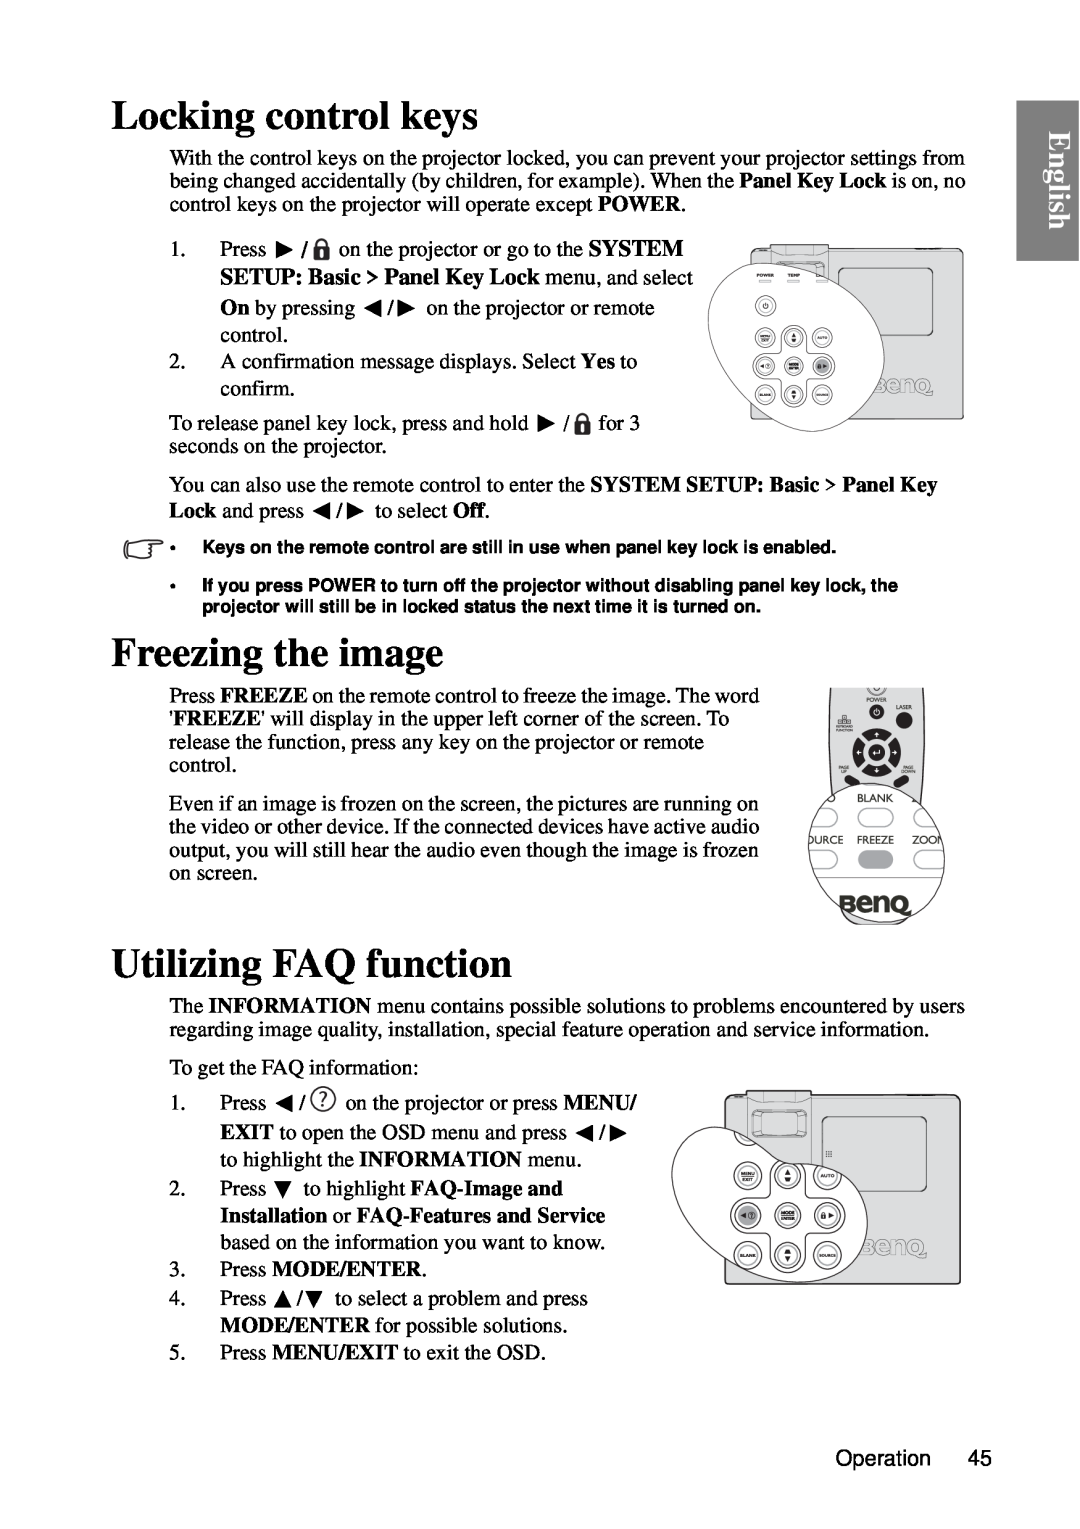 BenQ MP727, MP735 user manual Locking control keys, Freezing the image, Utilizing FAQ function, English 